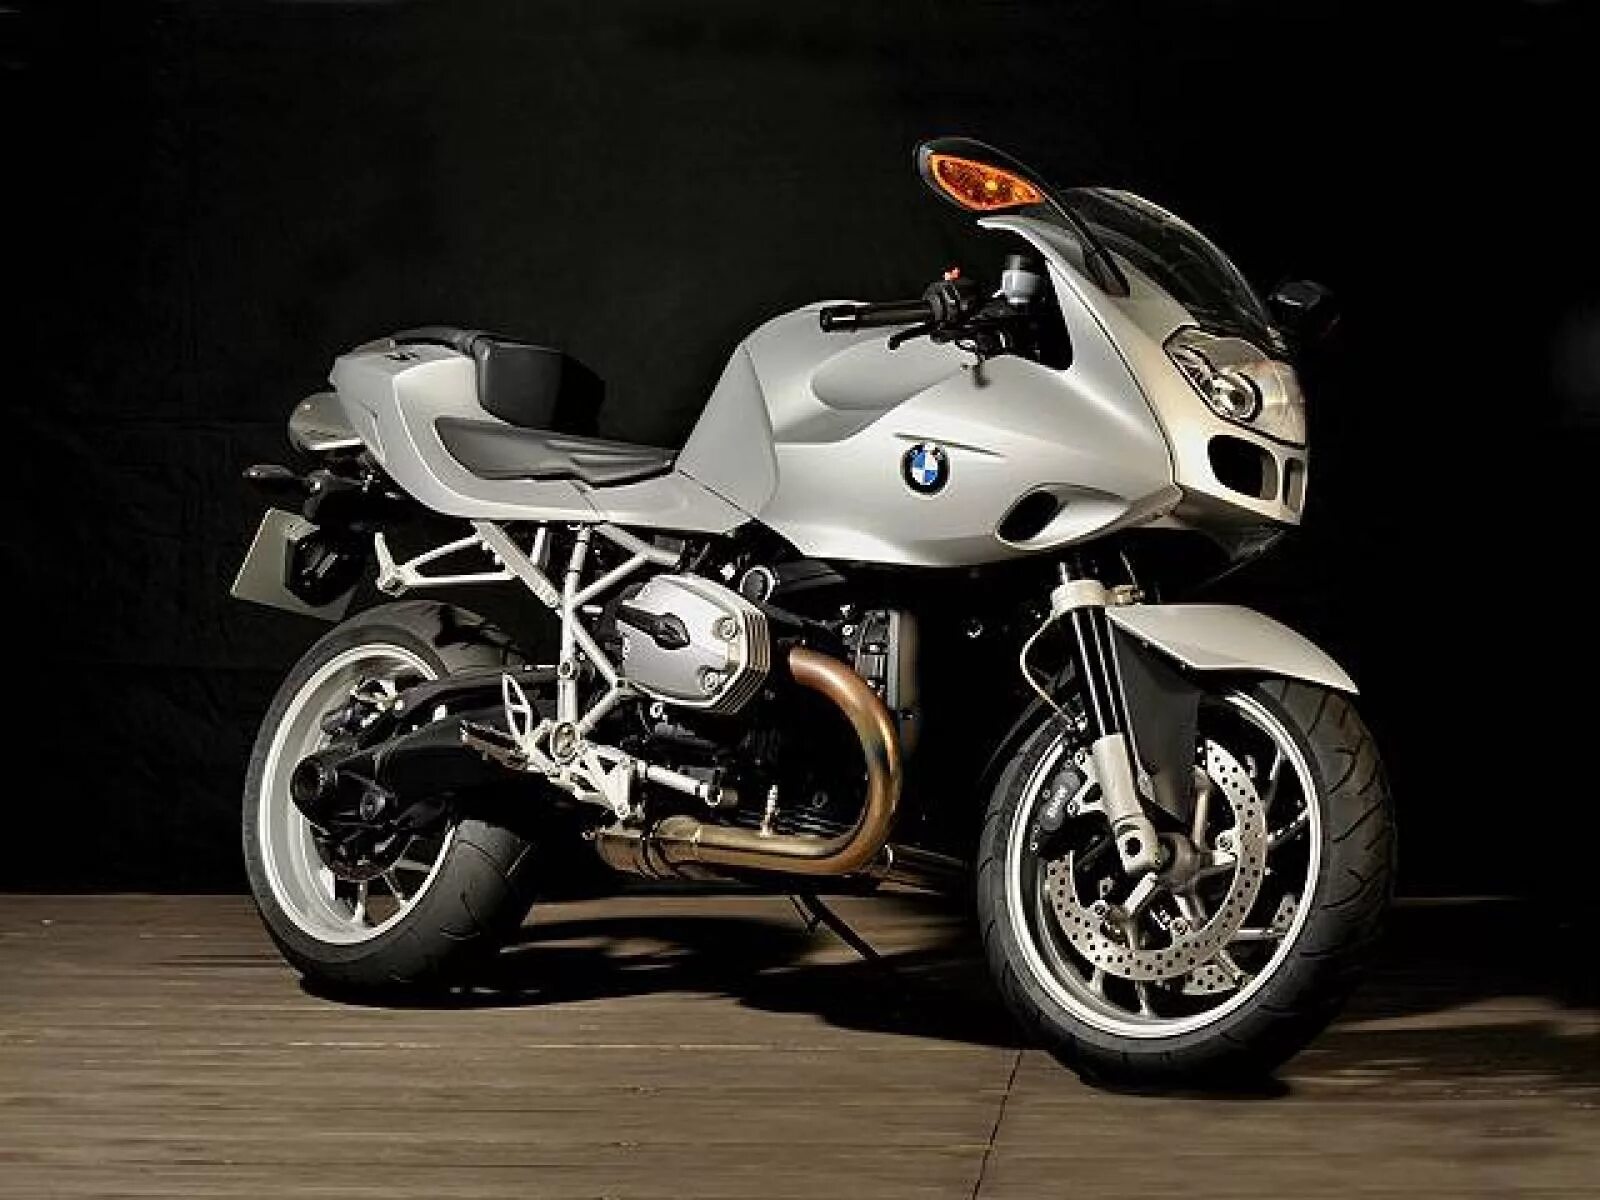 BMW мотоцикл к1200s. Мотоцикл BMW r1200 2006. R1200s. Мотоцикл BMW r1200r Classic.